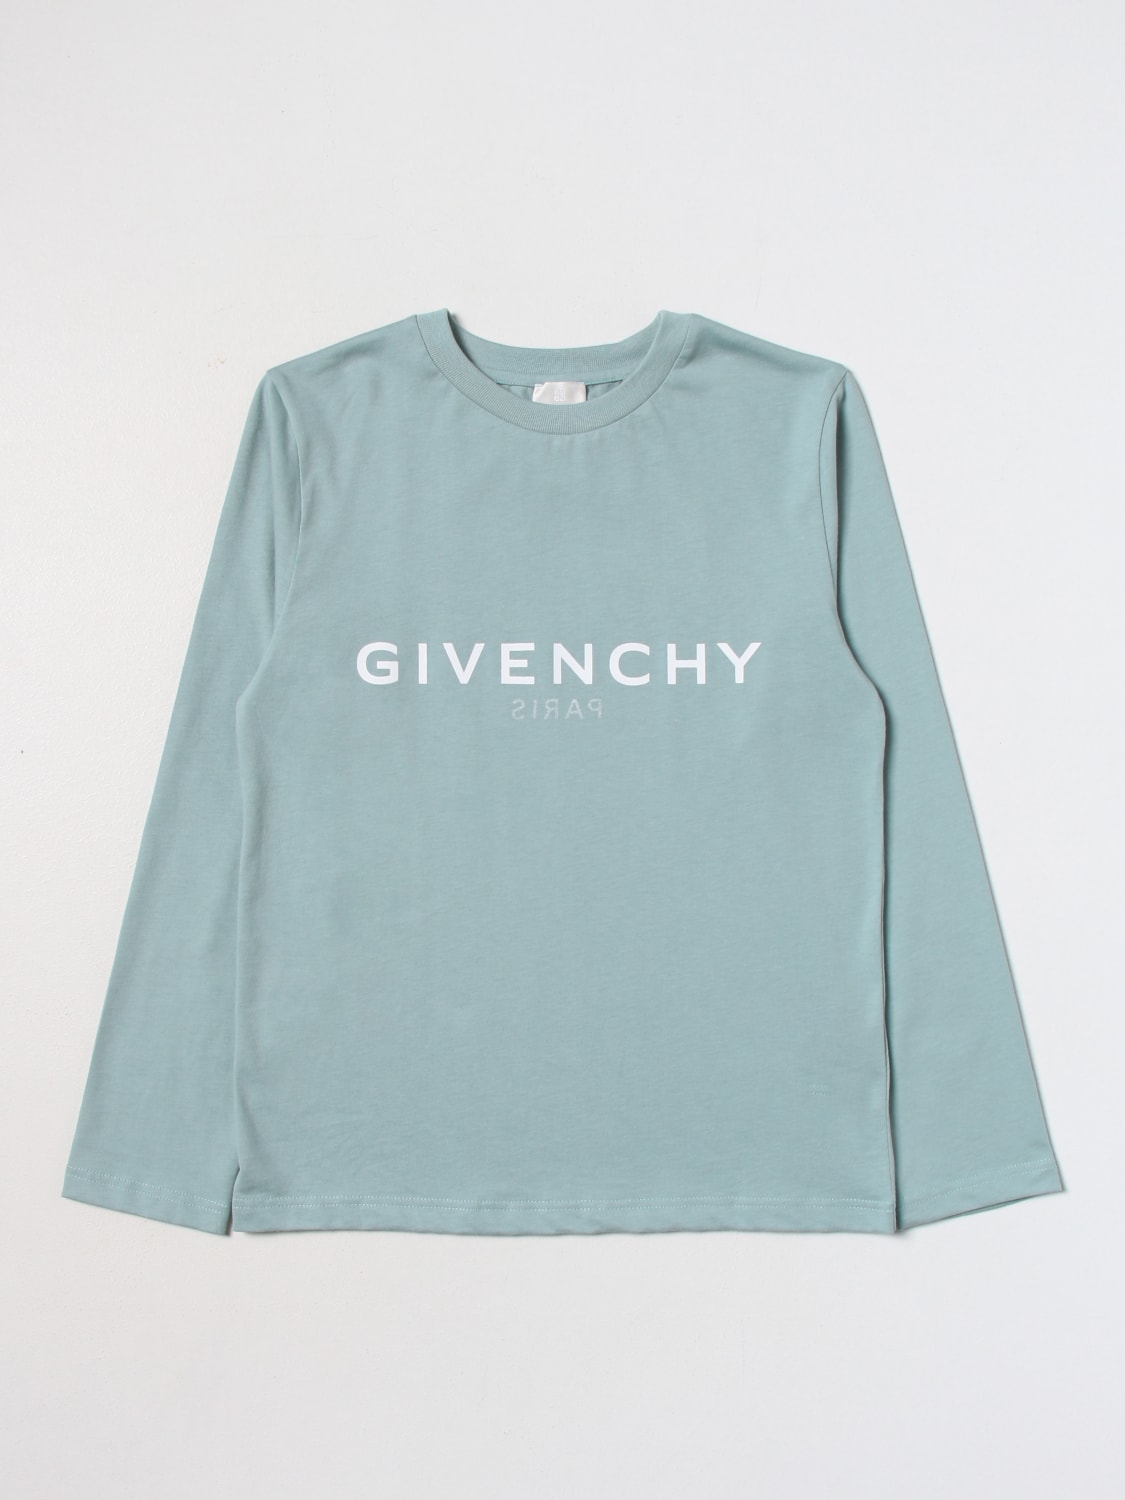 Givenchy Long Sleeves Tee